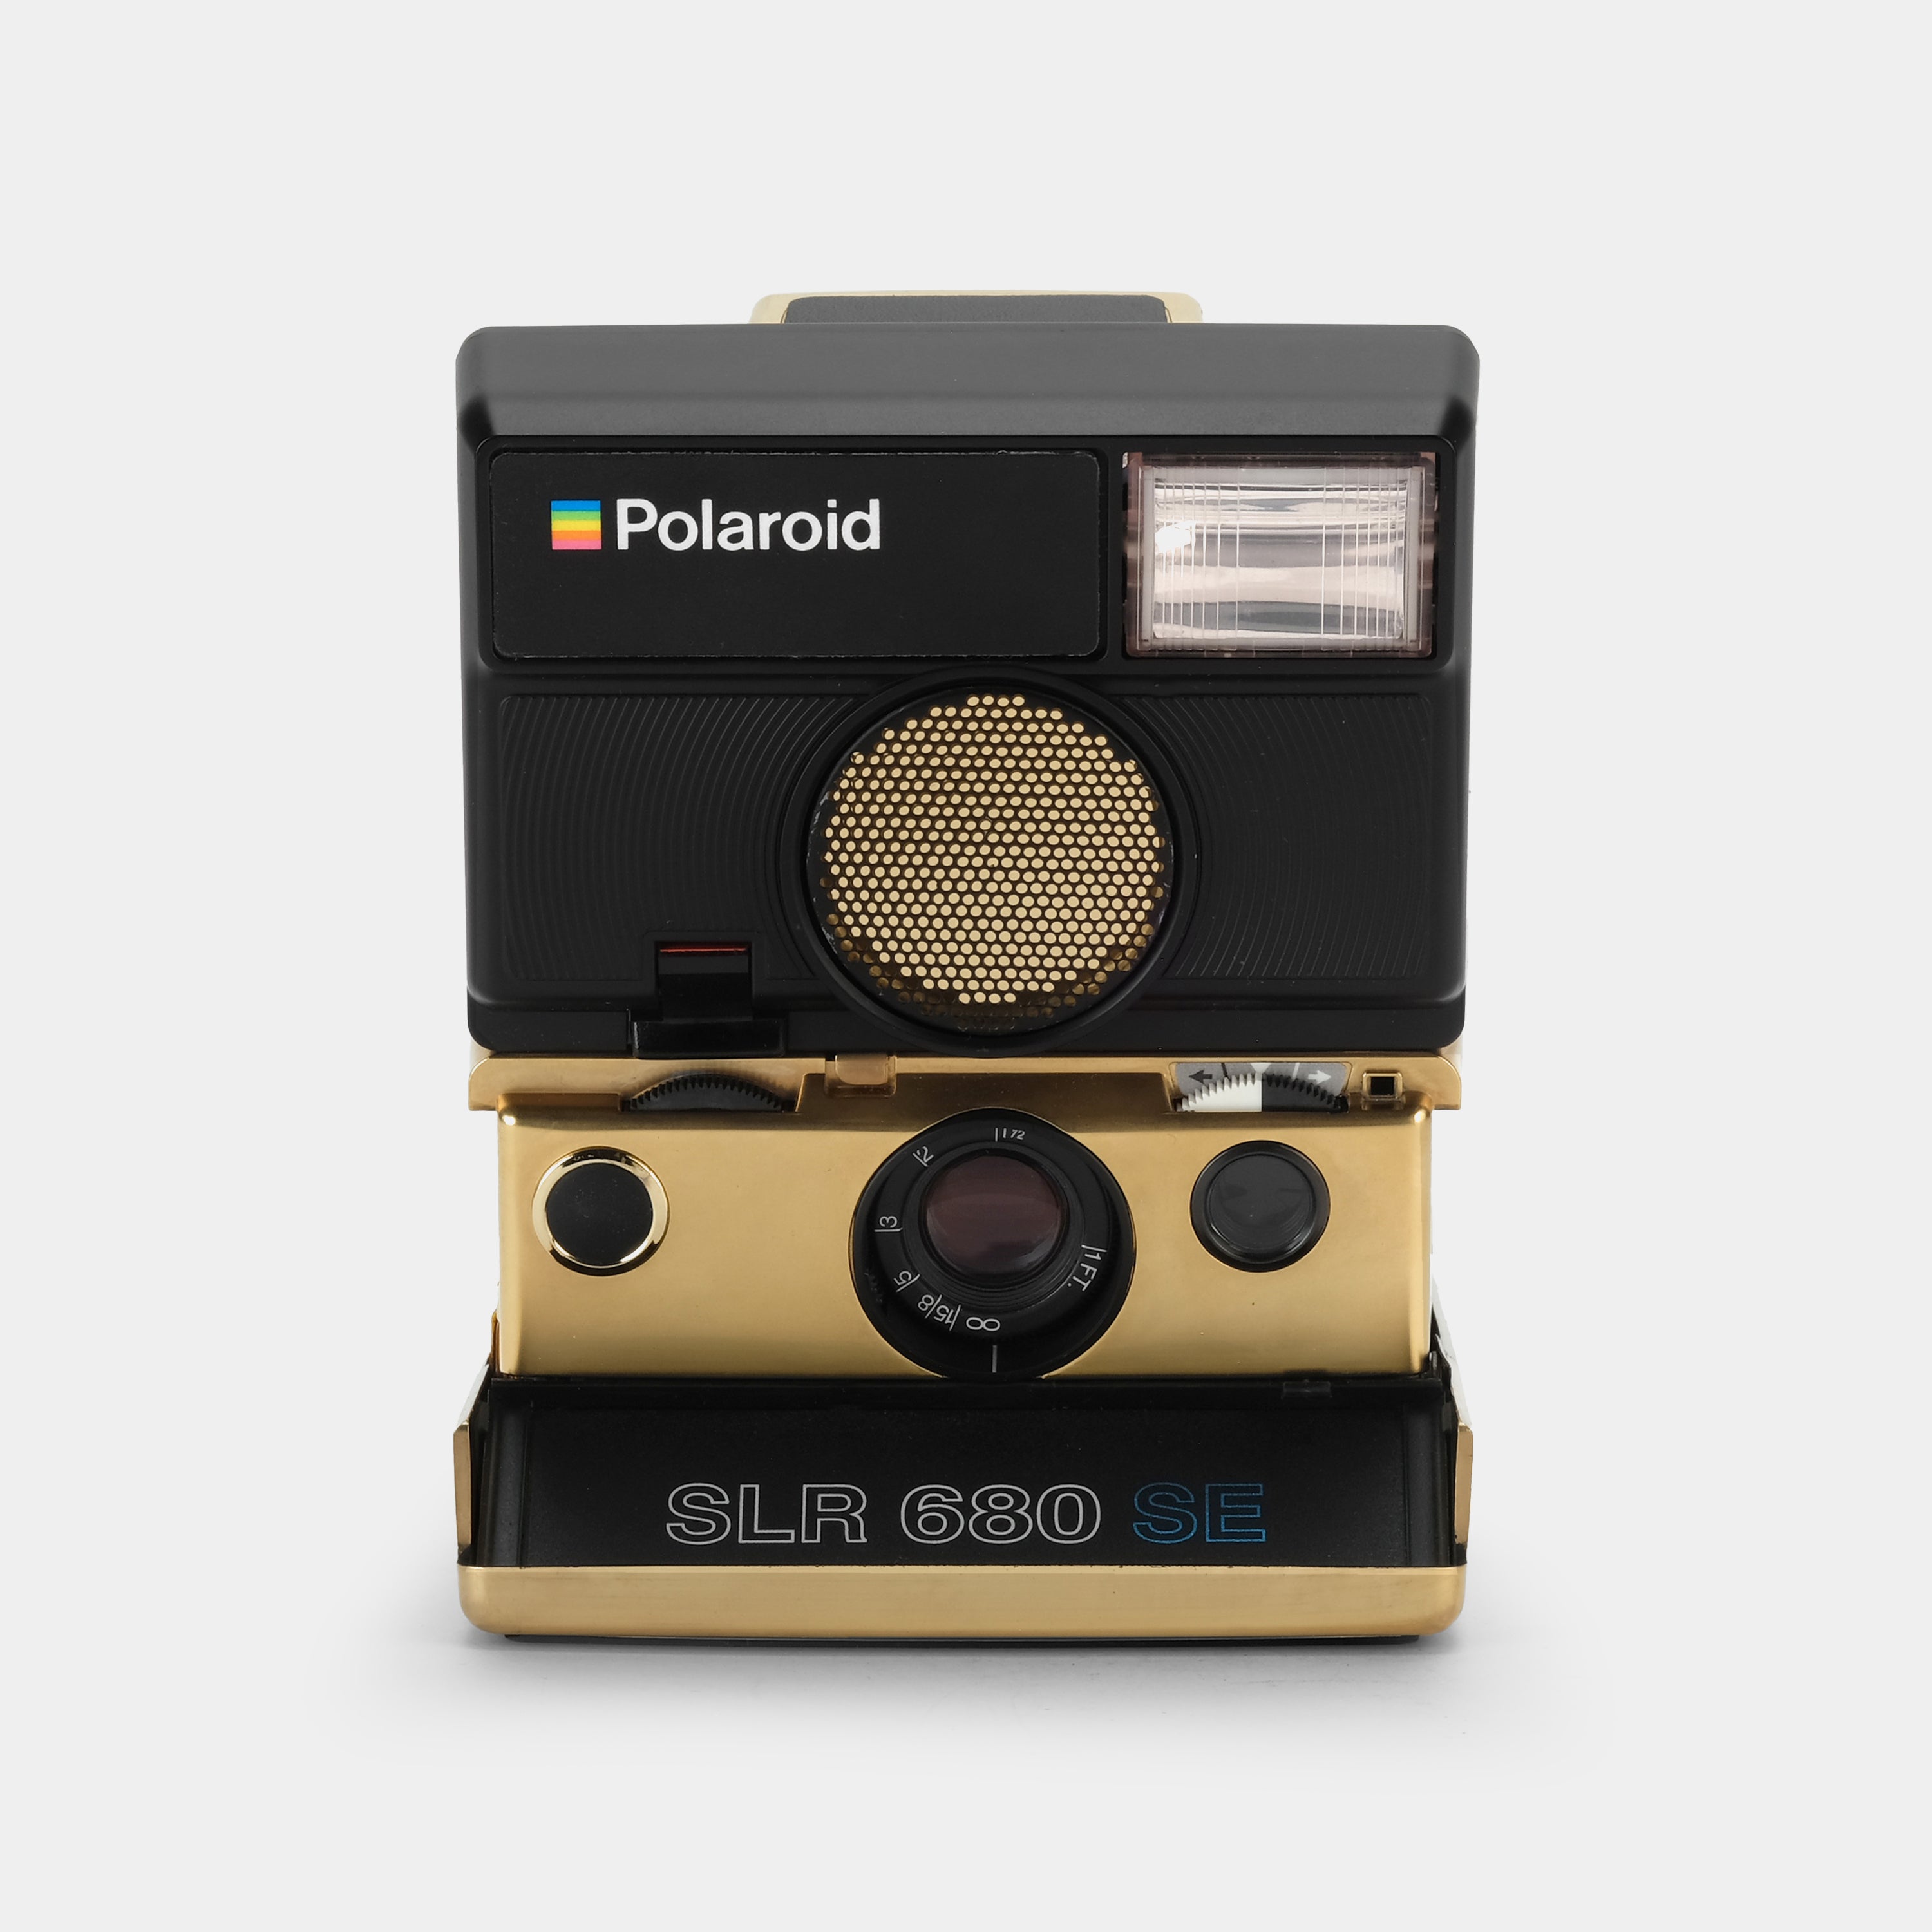 Polaroid 600 SLR 680 SE Gold Folding Instant Film Camera